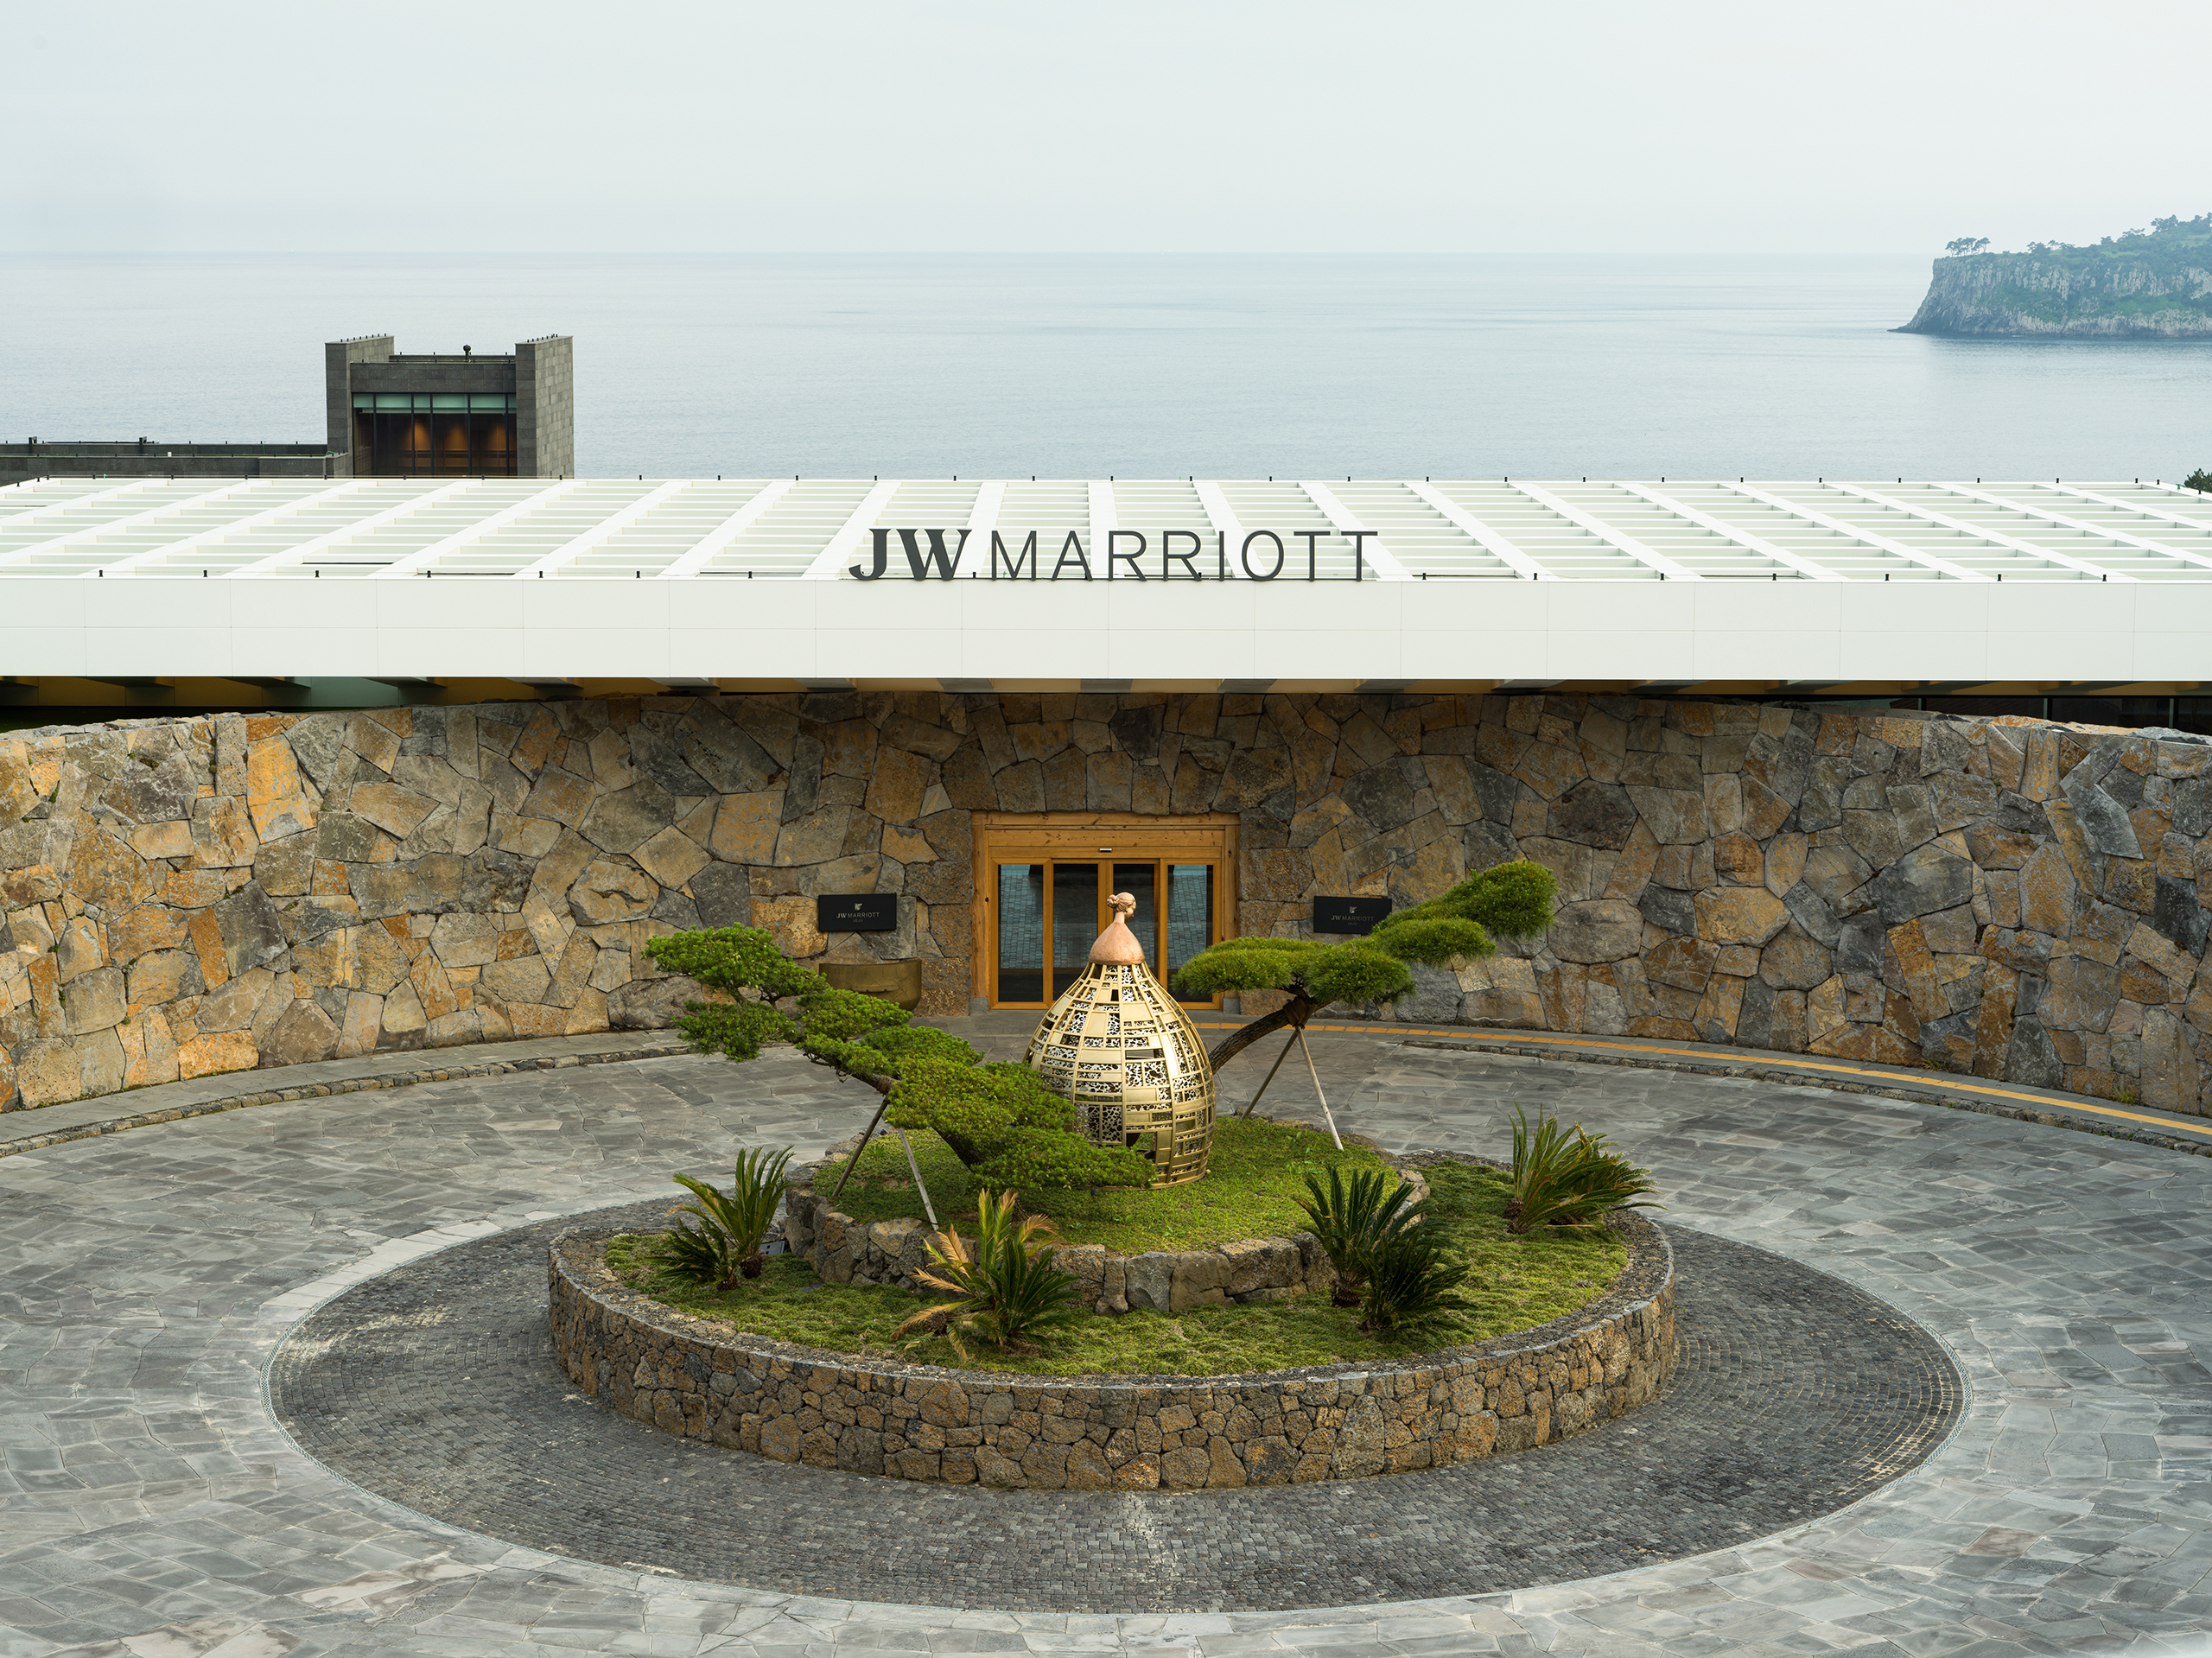 JW Marriott Jeju entrance